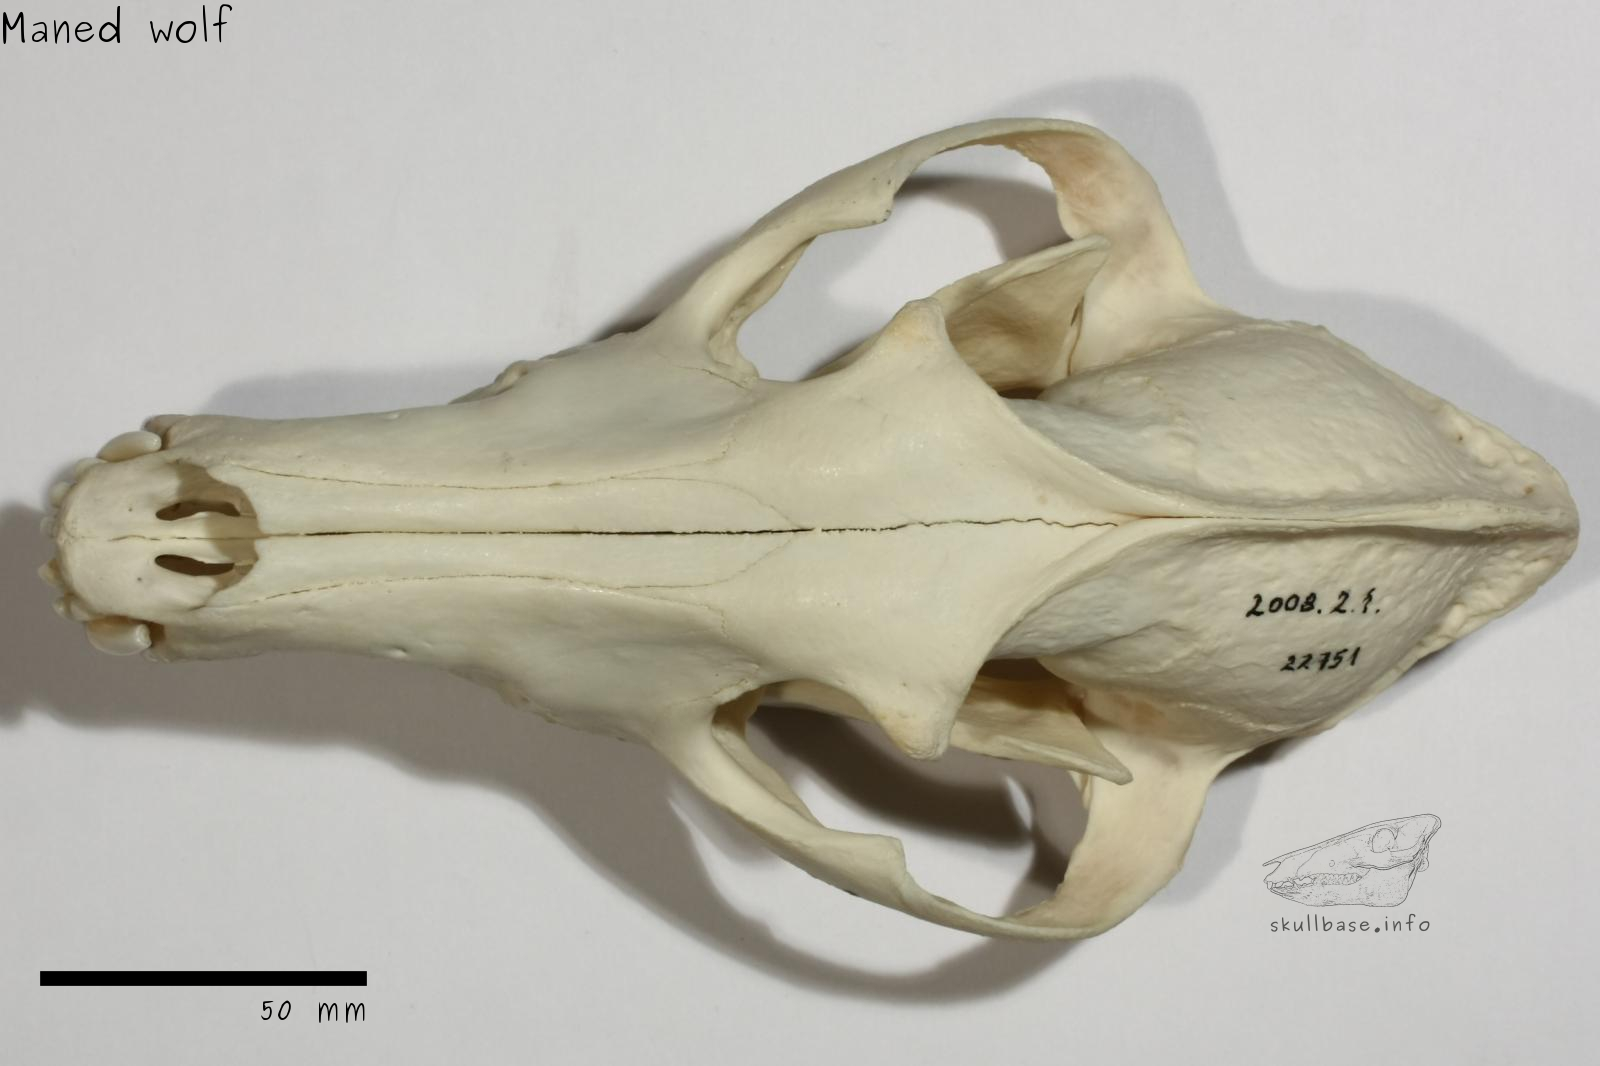 Maned wolf (Chrysocyon brachyurus) skull dorsal view